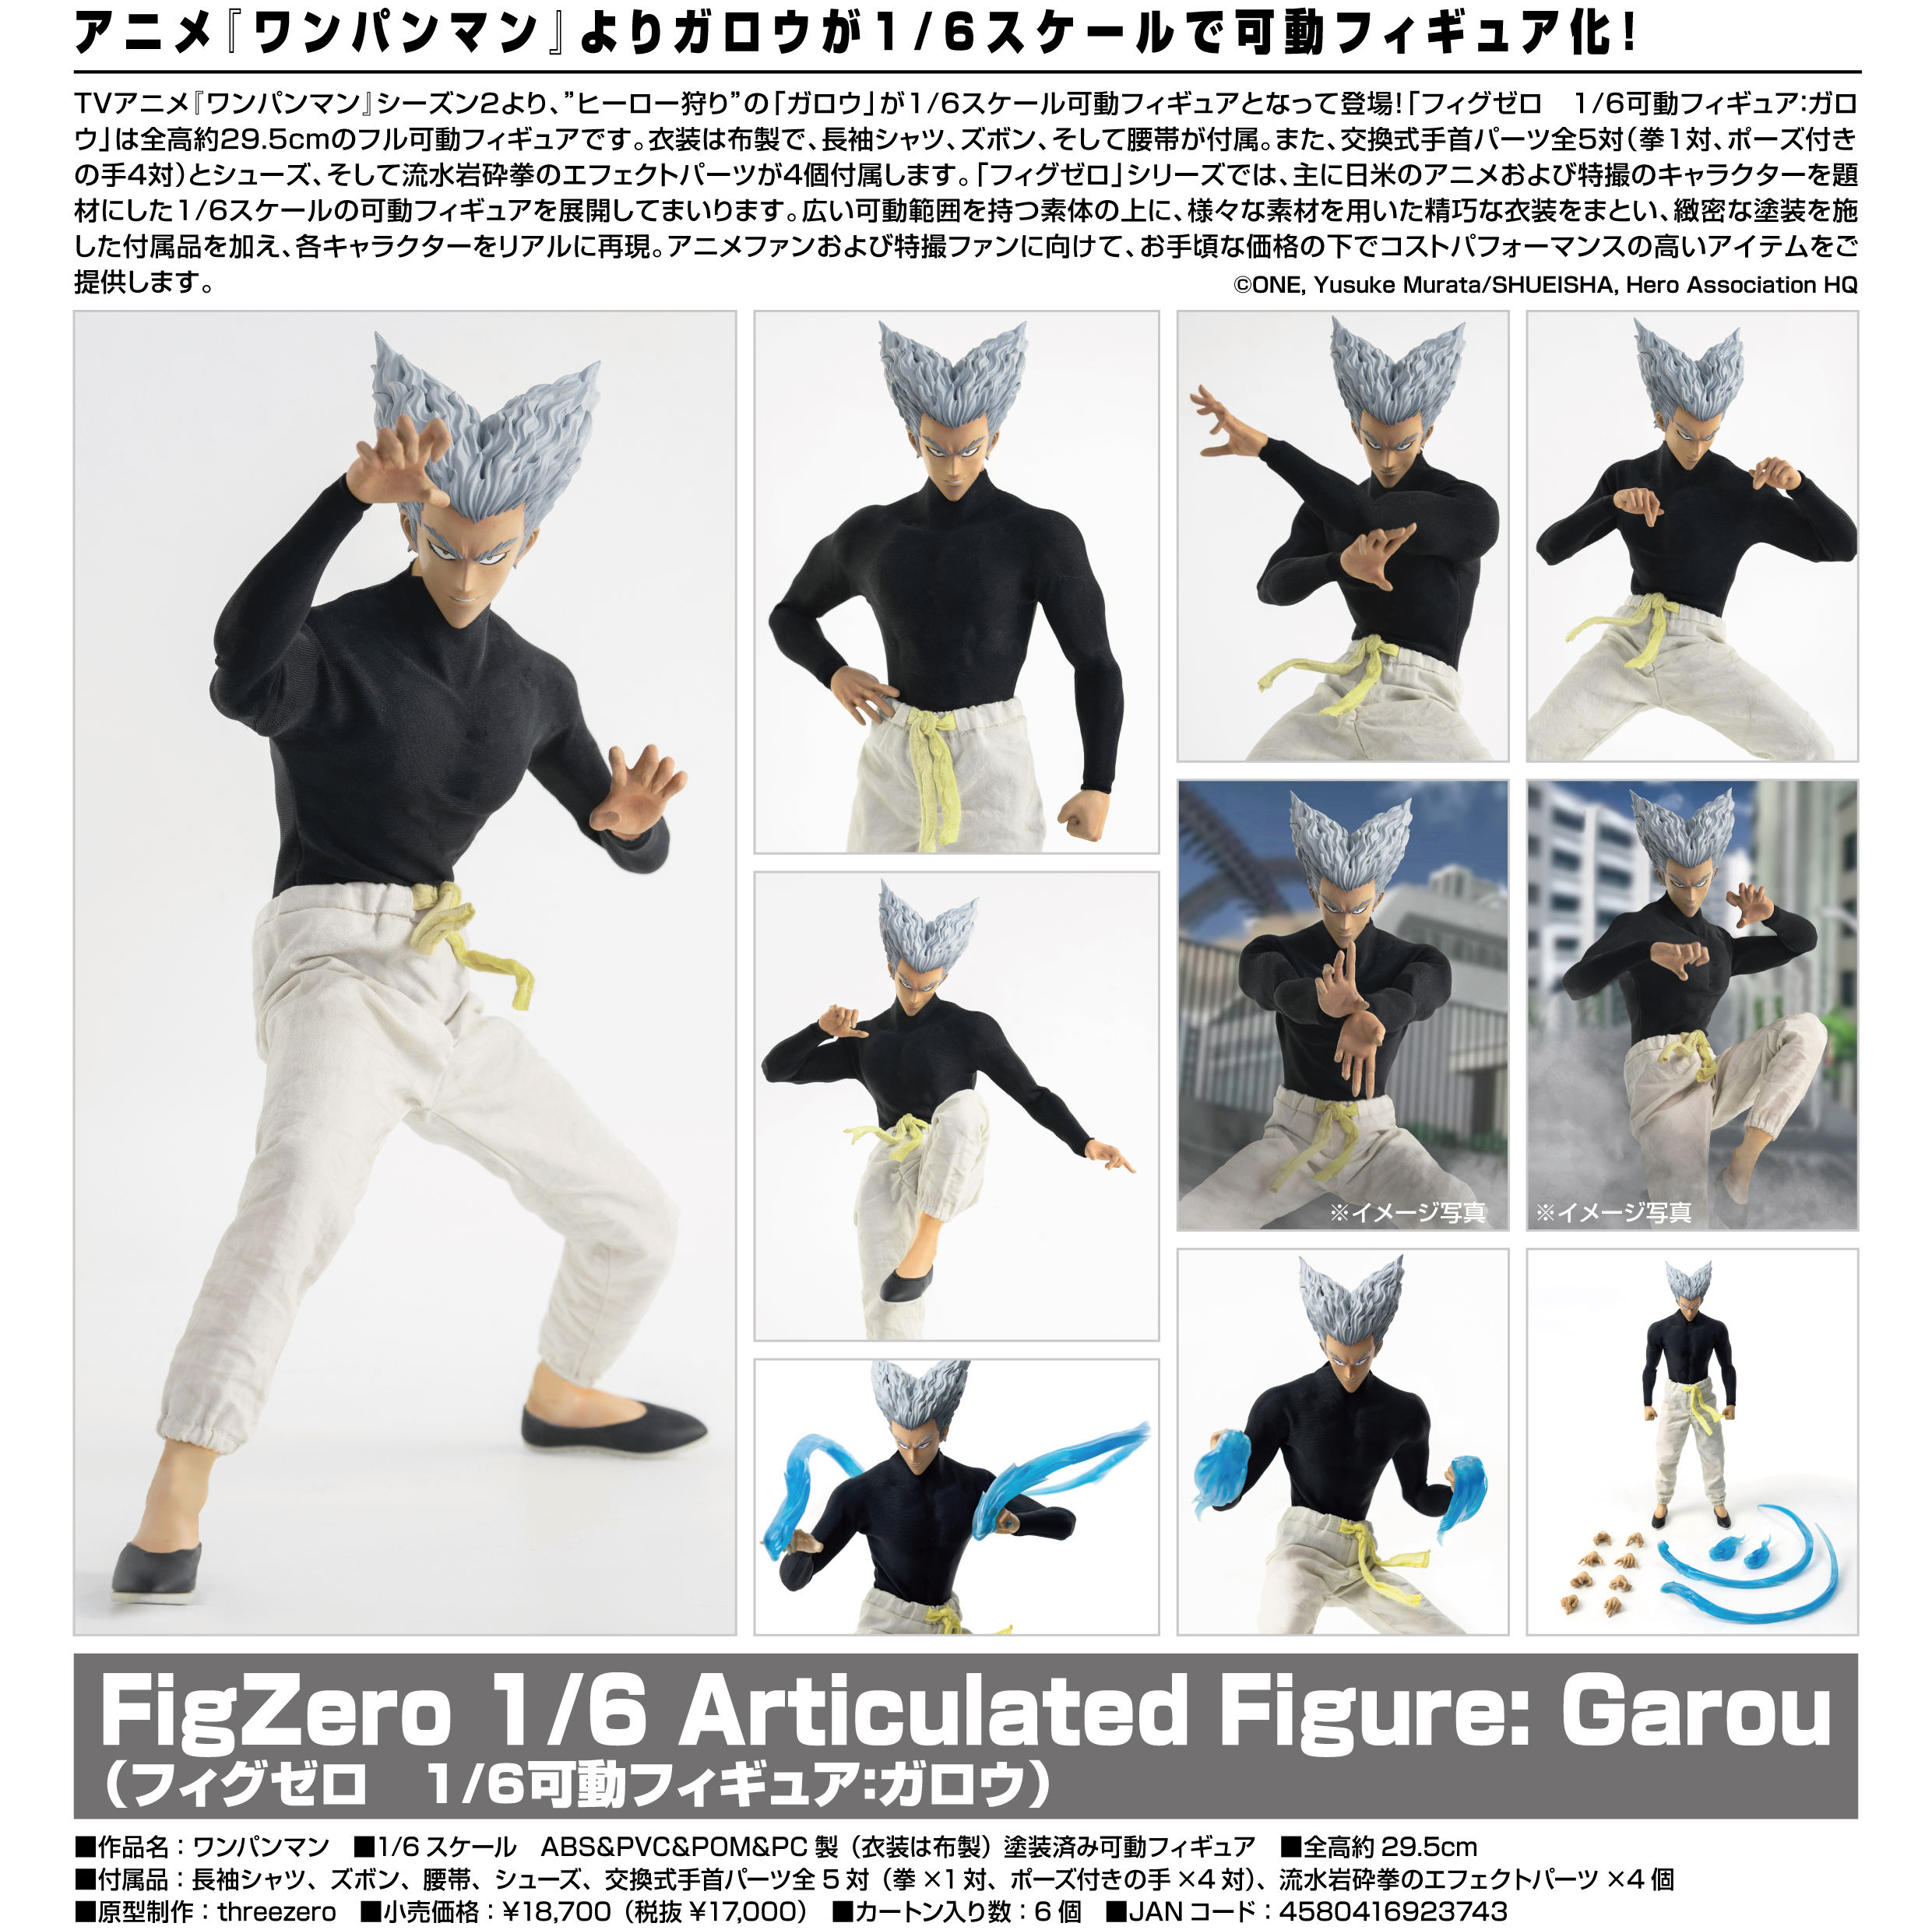 Garou FigZero Collectible Figure, One-punch Man